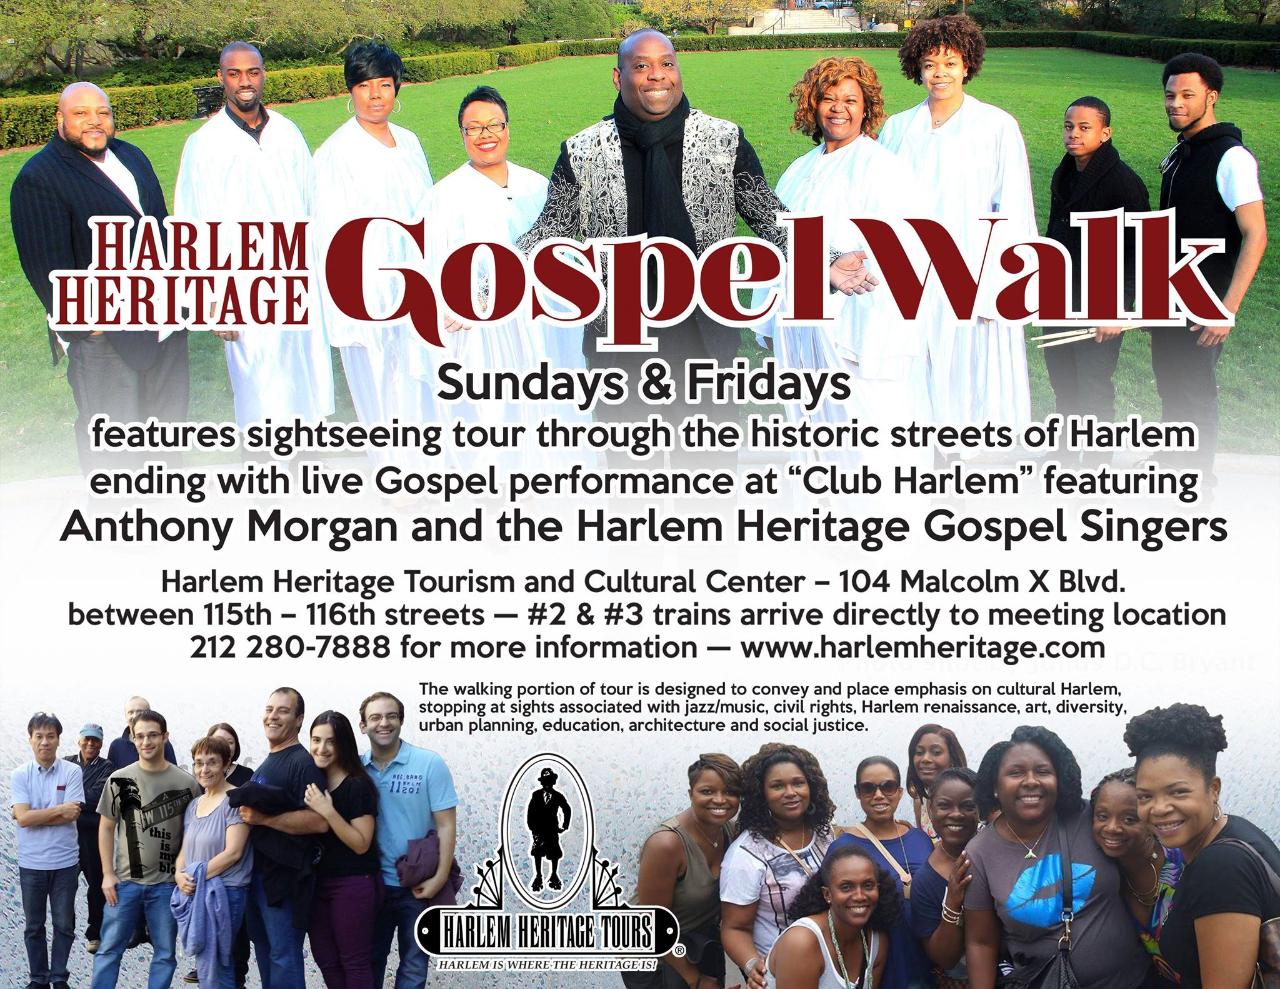 Harlem Heritage Gospel Walk